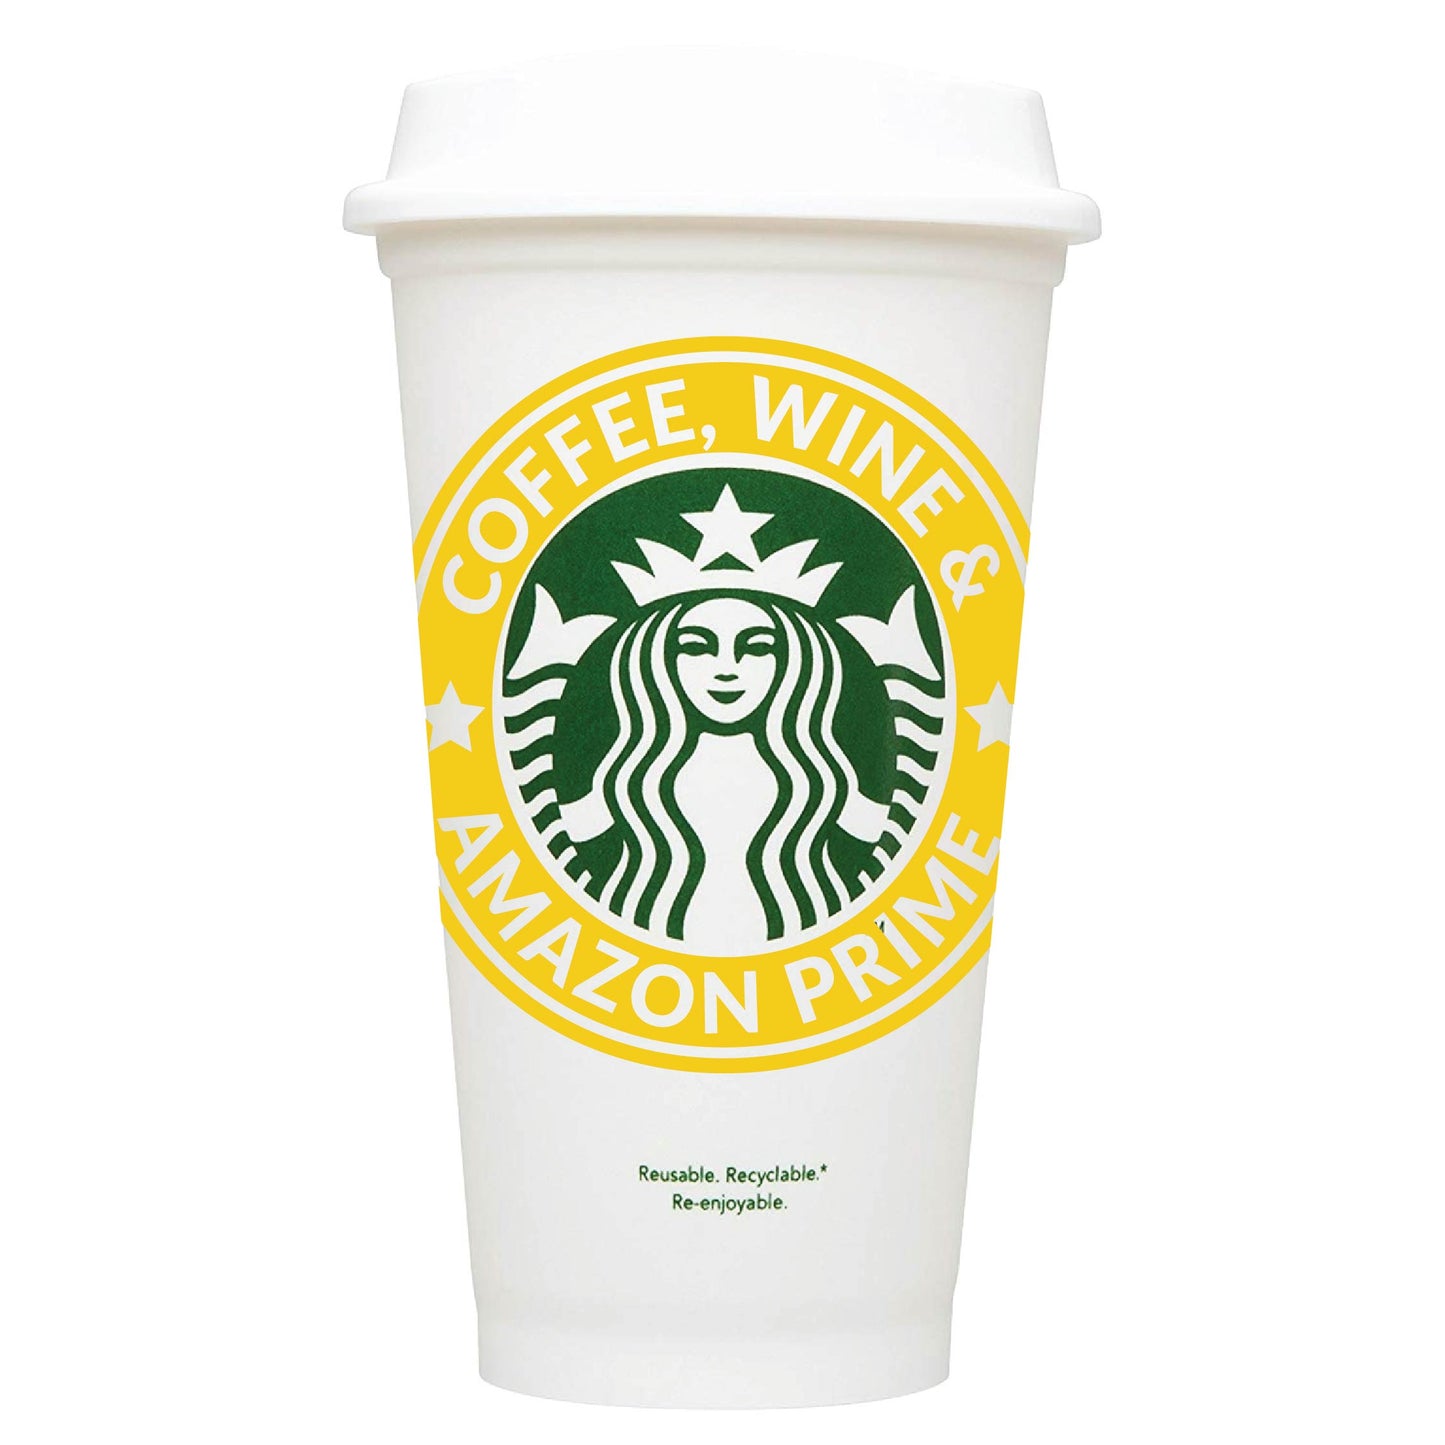 Coffee, Wine & Amazon Prime Starbucks Hot Cup